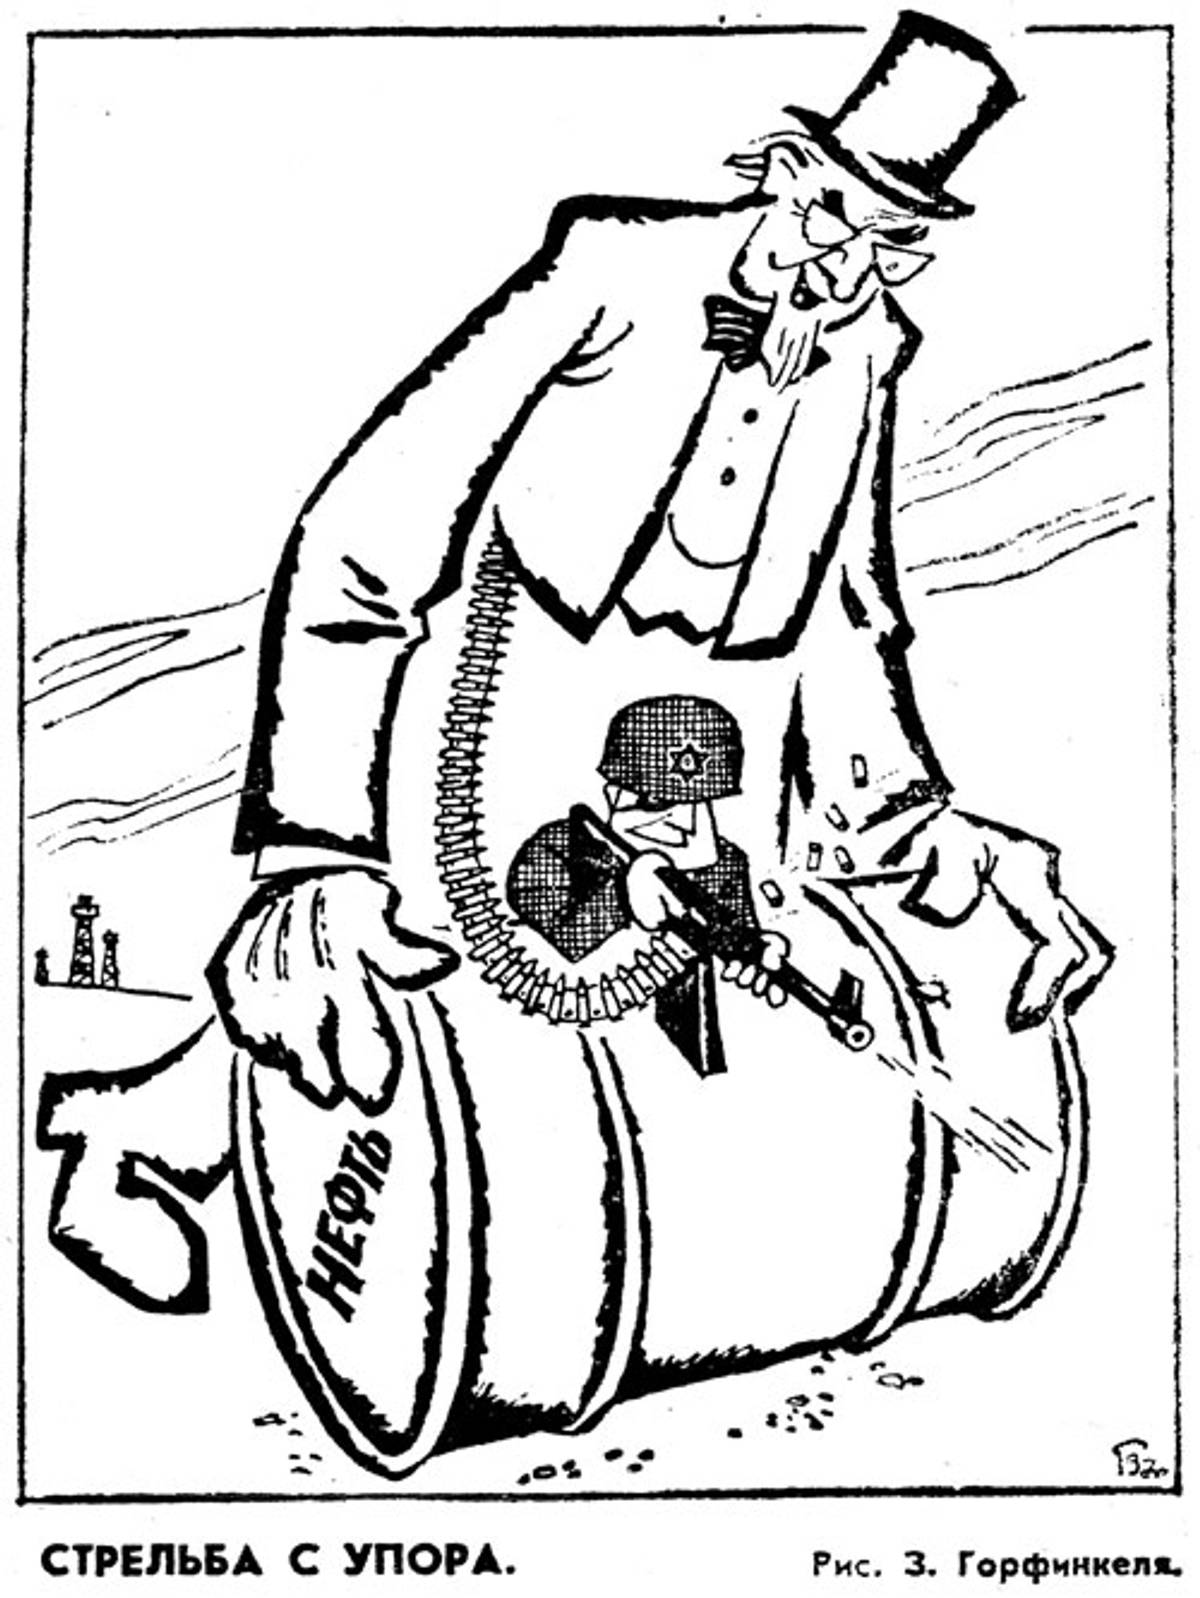 Fig. 5: ‘Firing point-blank,’ R. Gadimov, Sovietskaya Latvia, Jan. 29, 1970; Pravda, March 8, 1970. (From The Israeli-Arab Conflict in Soviet Caricatures, 1967–1973 by Yeshayahu Nir, Tcherikover Publishers, 1976)